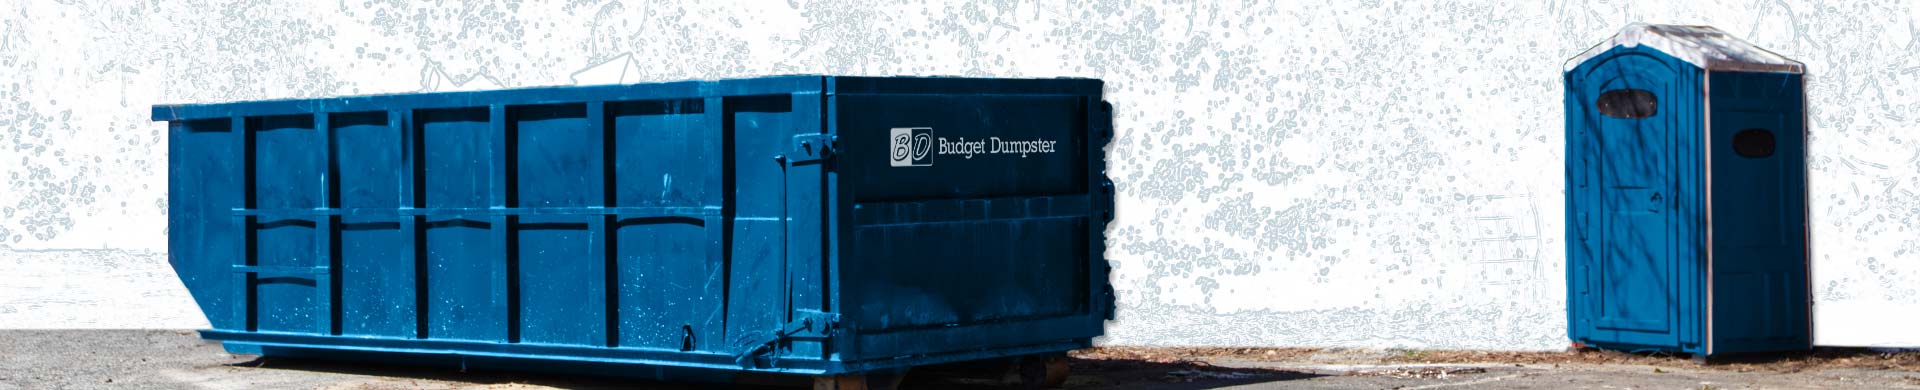 Blue Budget Dumpster and Matching Porta Potty